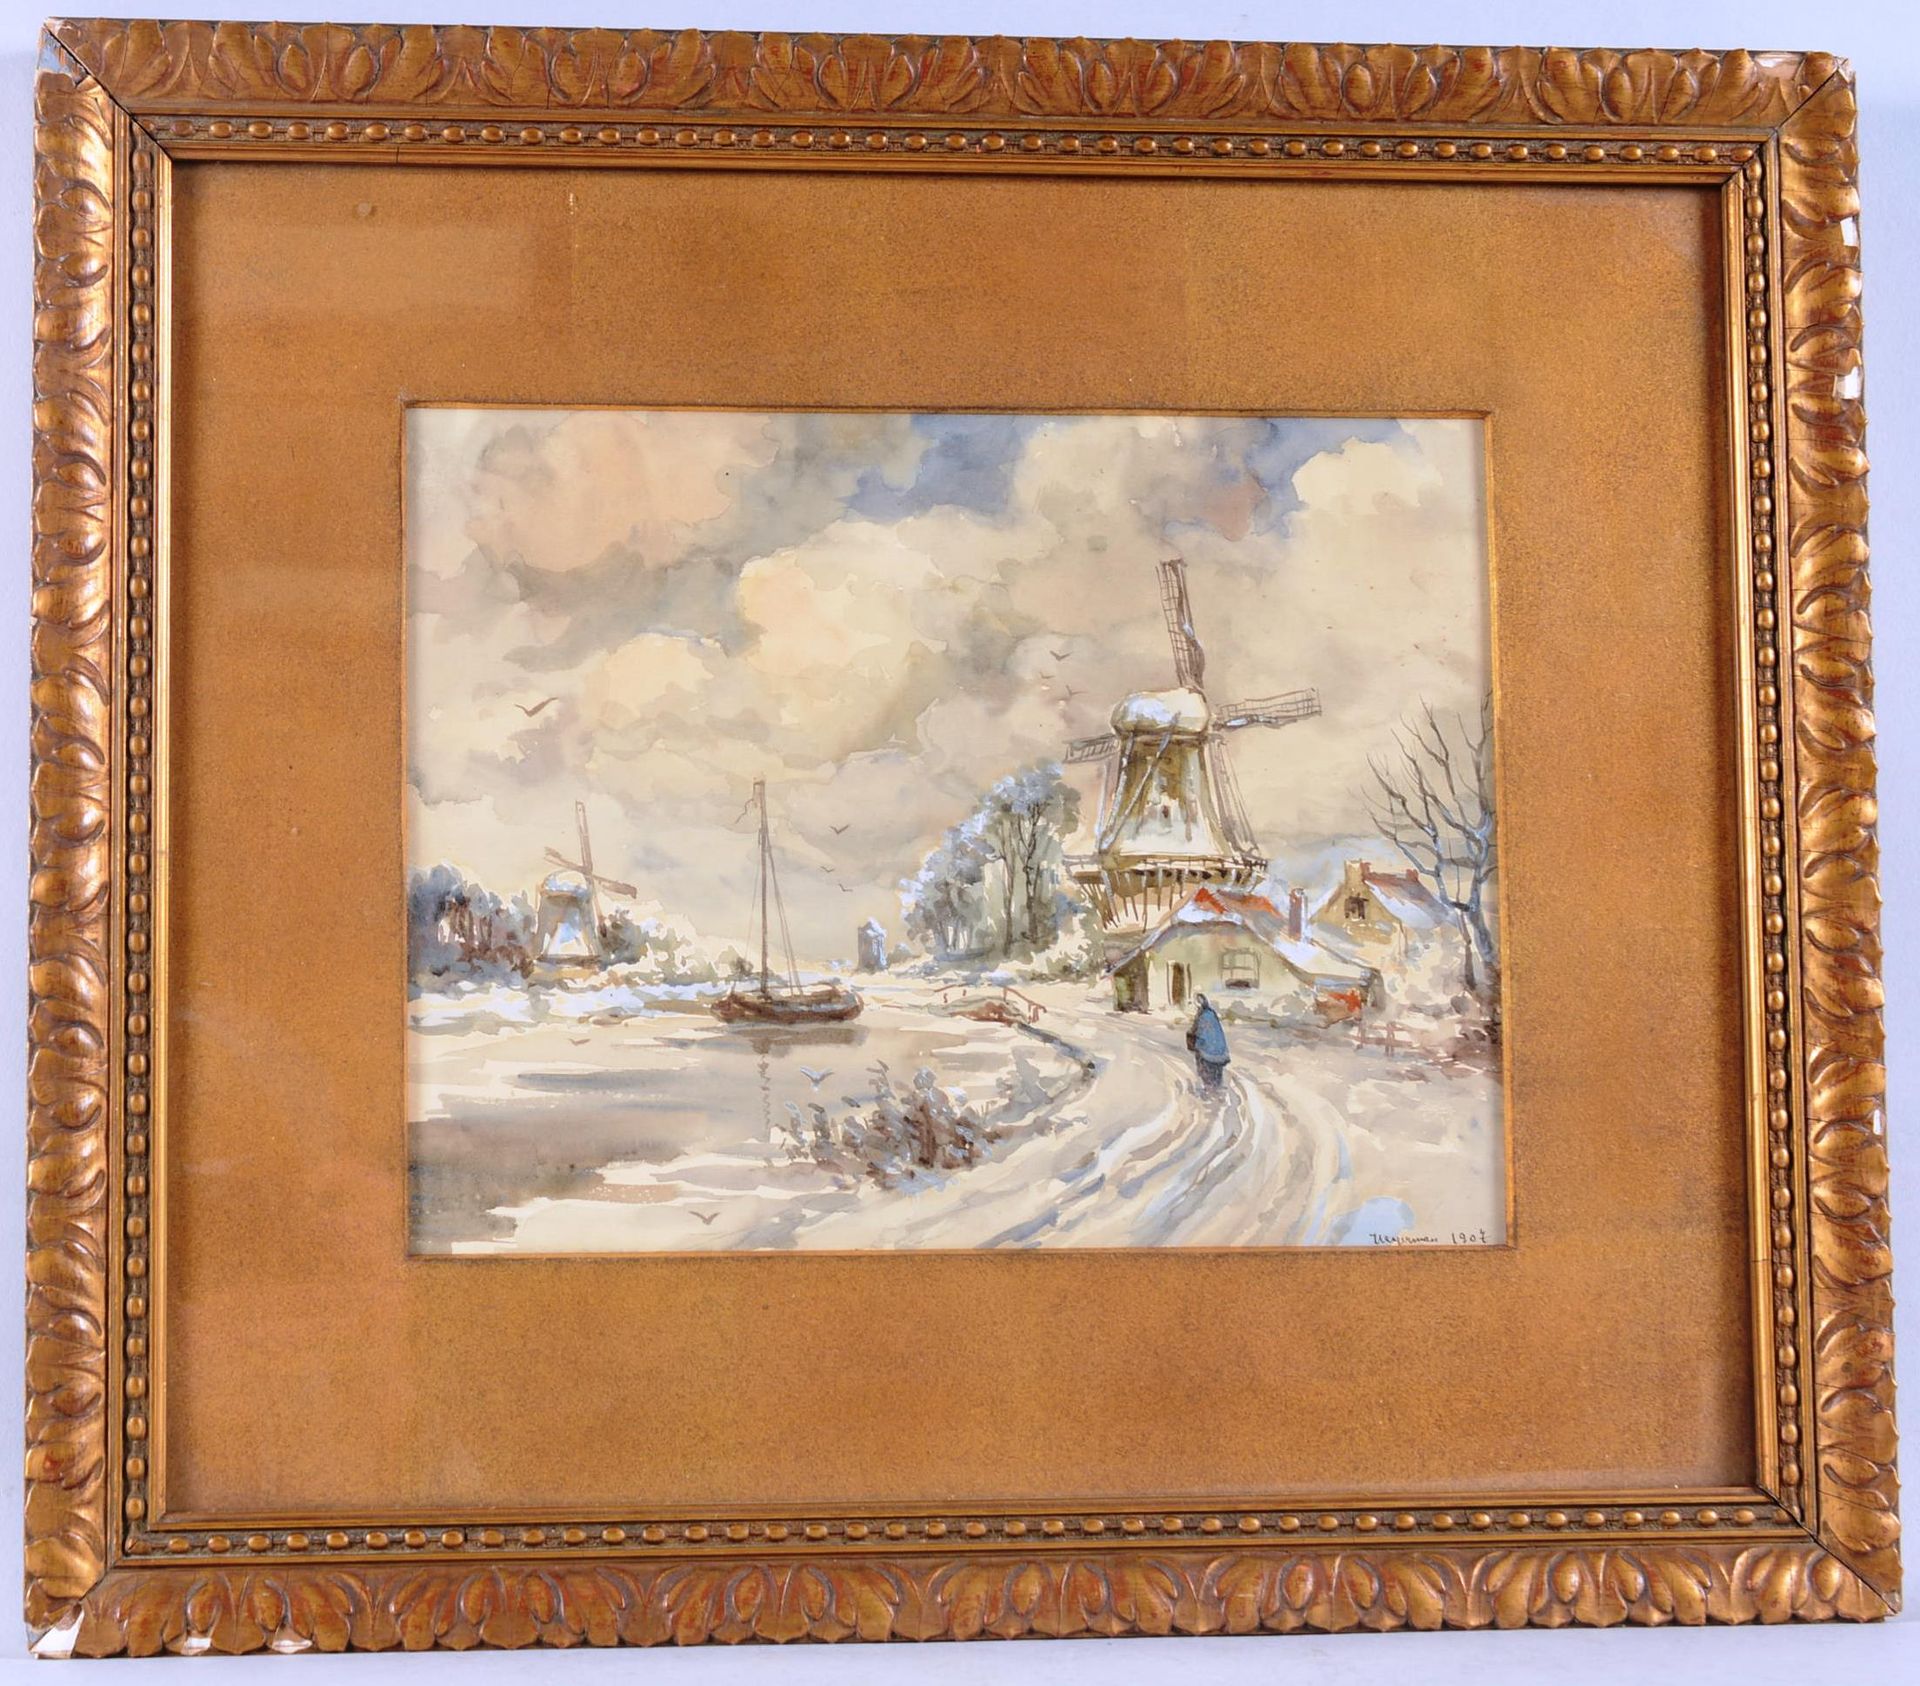 " Paysage d'hiver avec moulin" Marie HEYERMANS (1859-1937)

"Winter landscape wi&hellip;